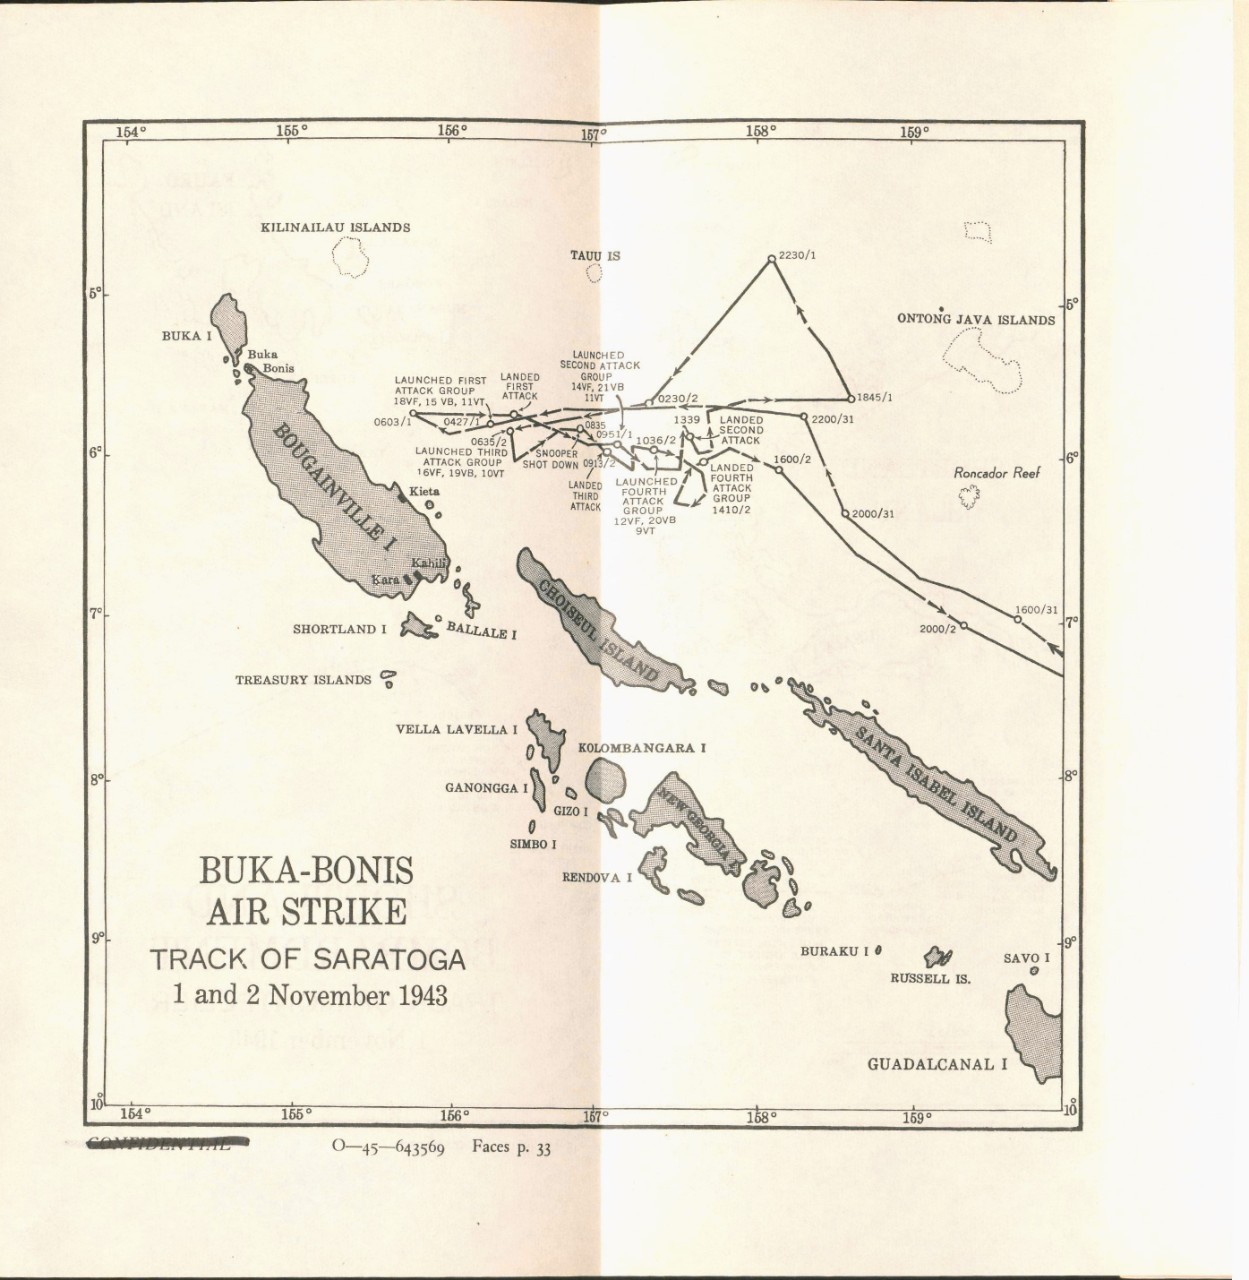 Bulka-Bonis Track of Saratoga, 1 and 2 November 1943